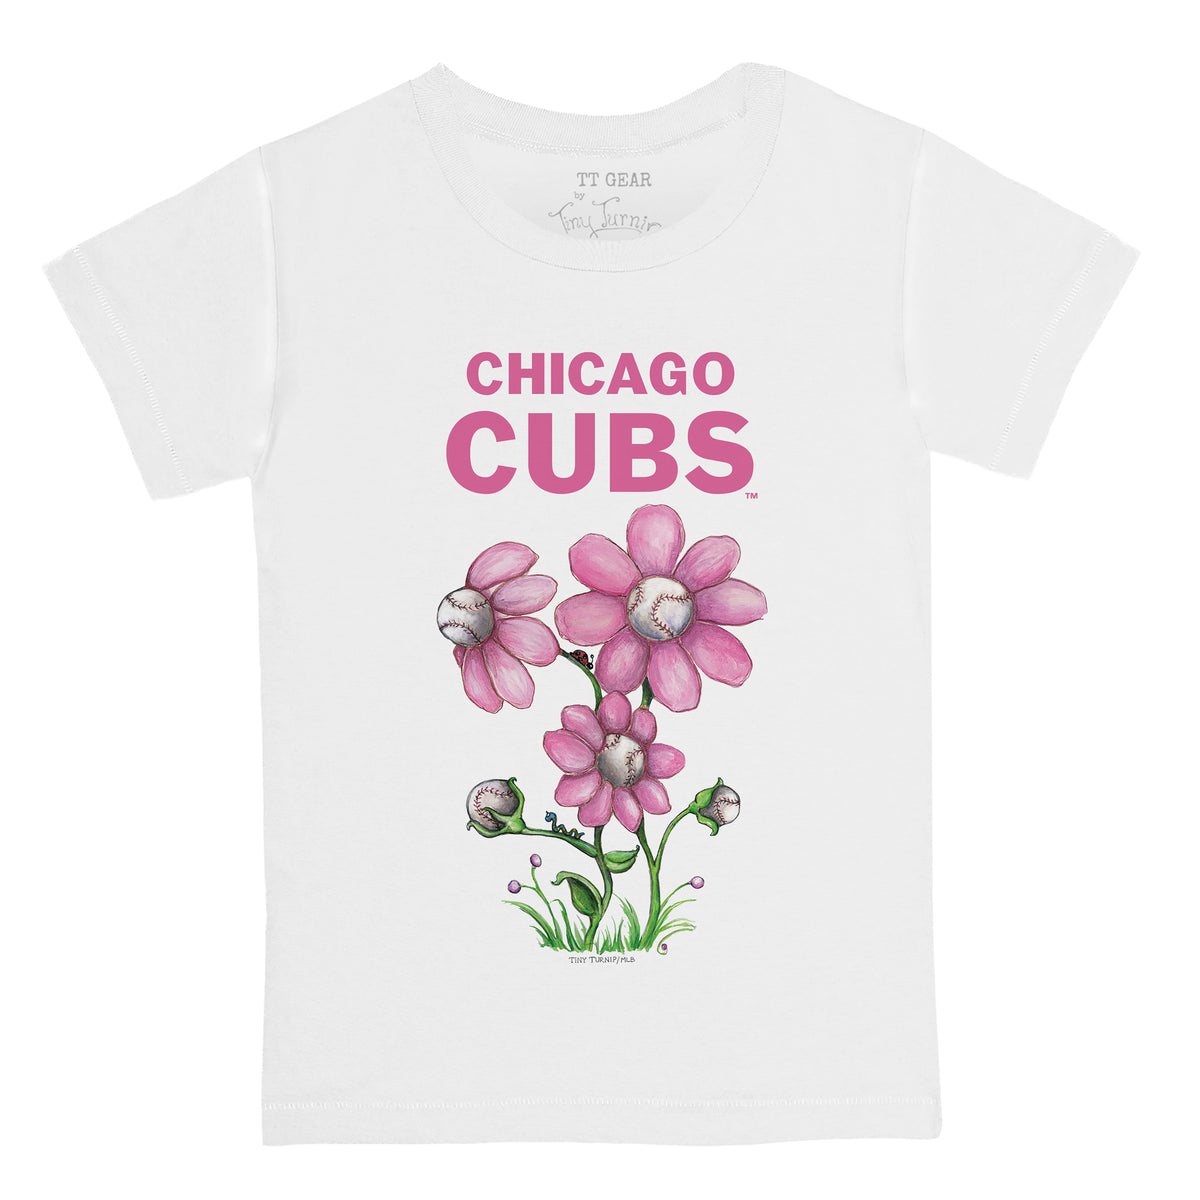 Lids Chicago Cubs Tiny Turnip Youth Baseball Cross Bats T-Shirt